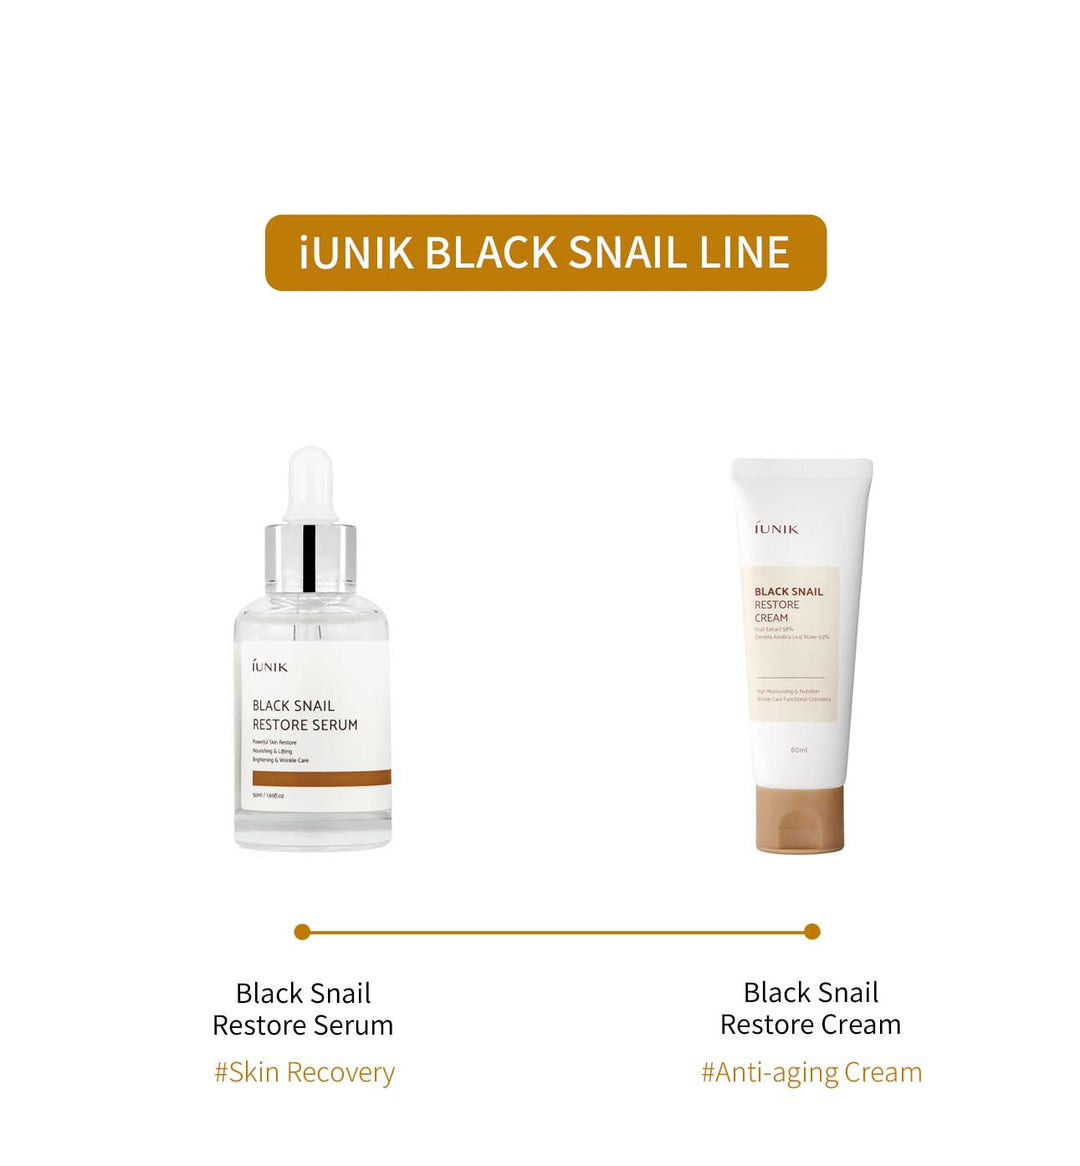 IUNIK Black Snail Edition Skin Care Set